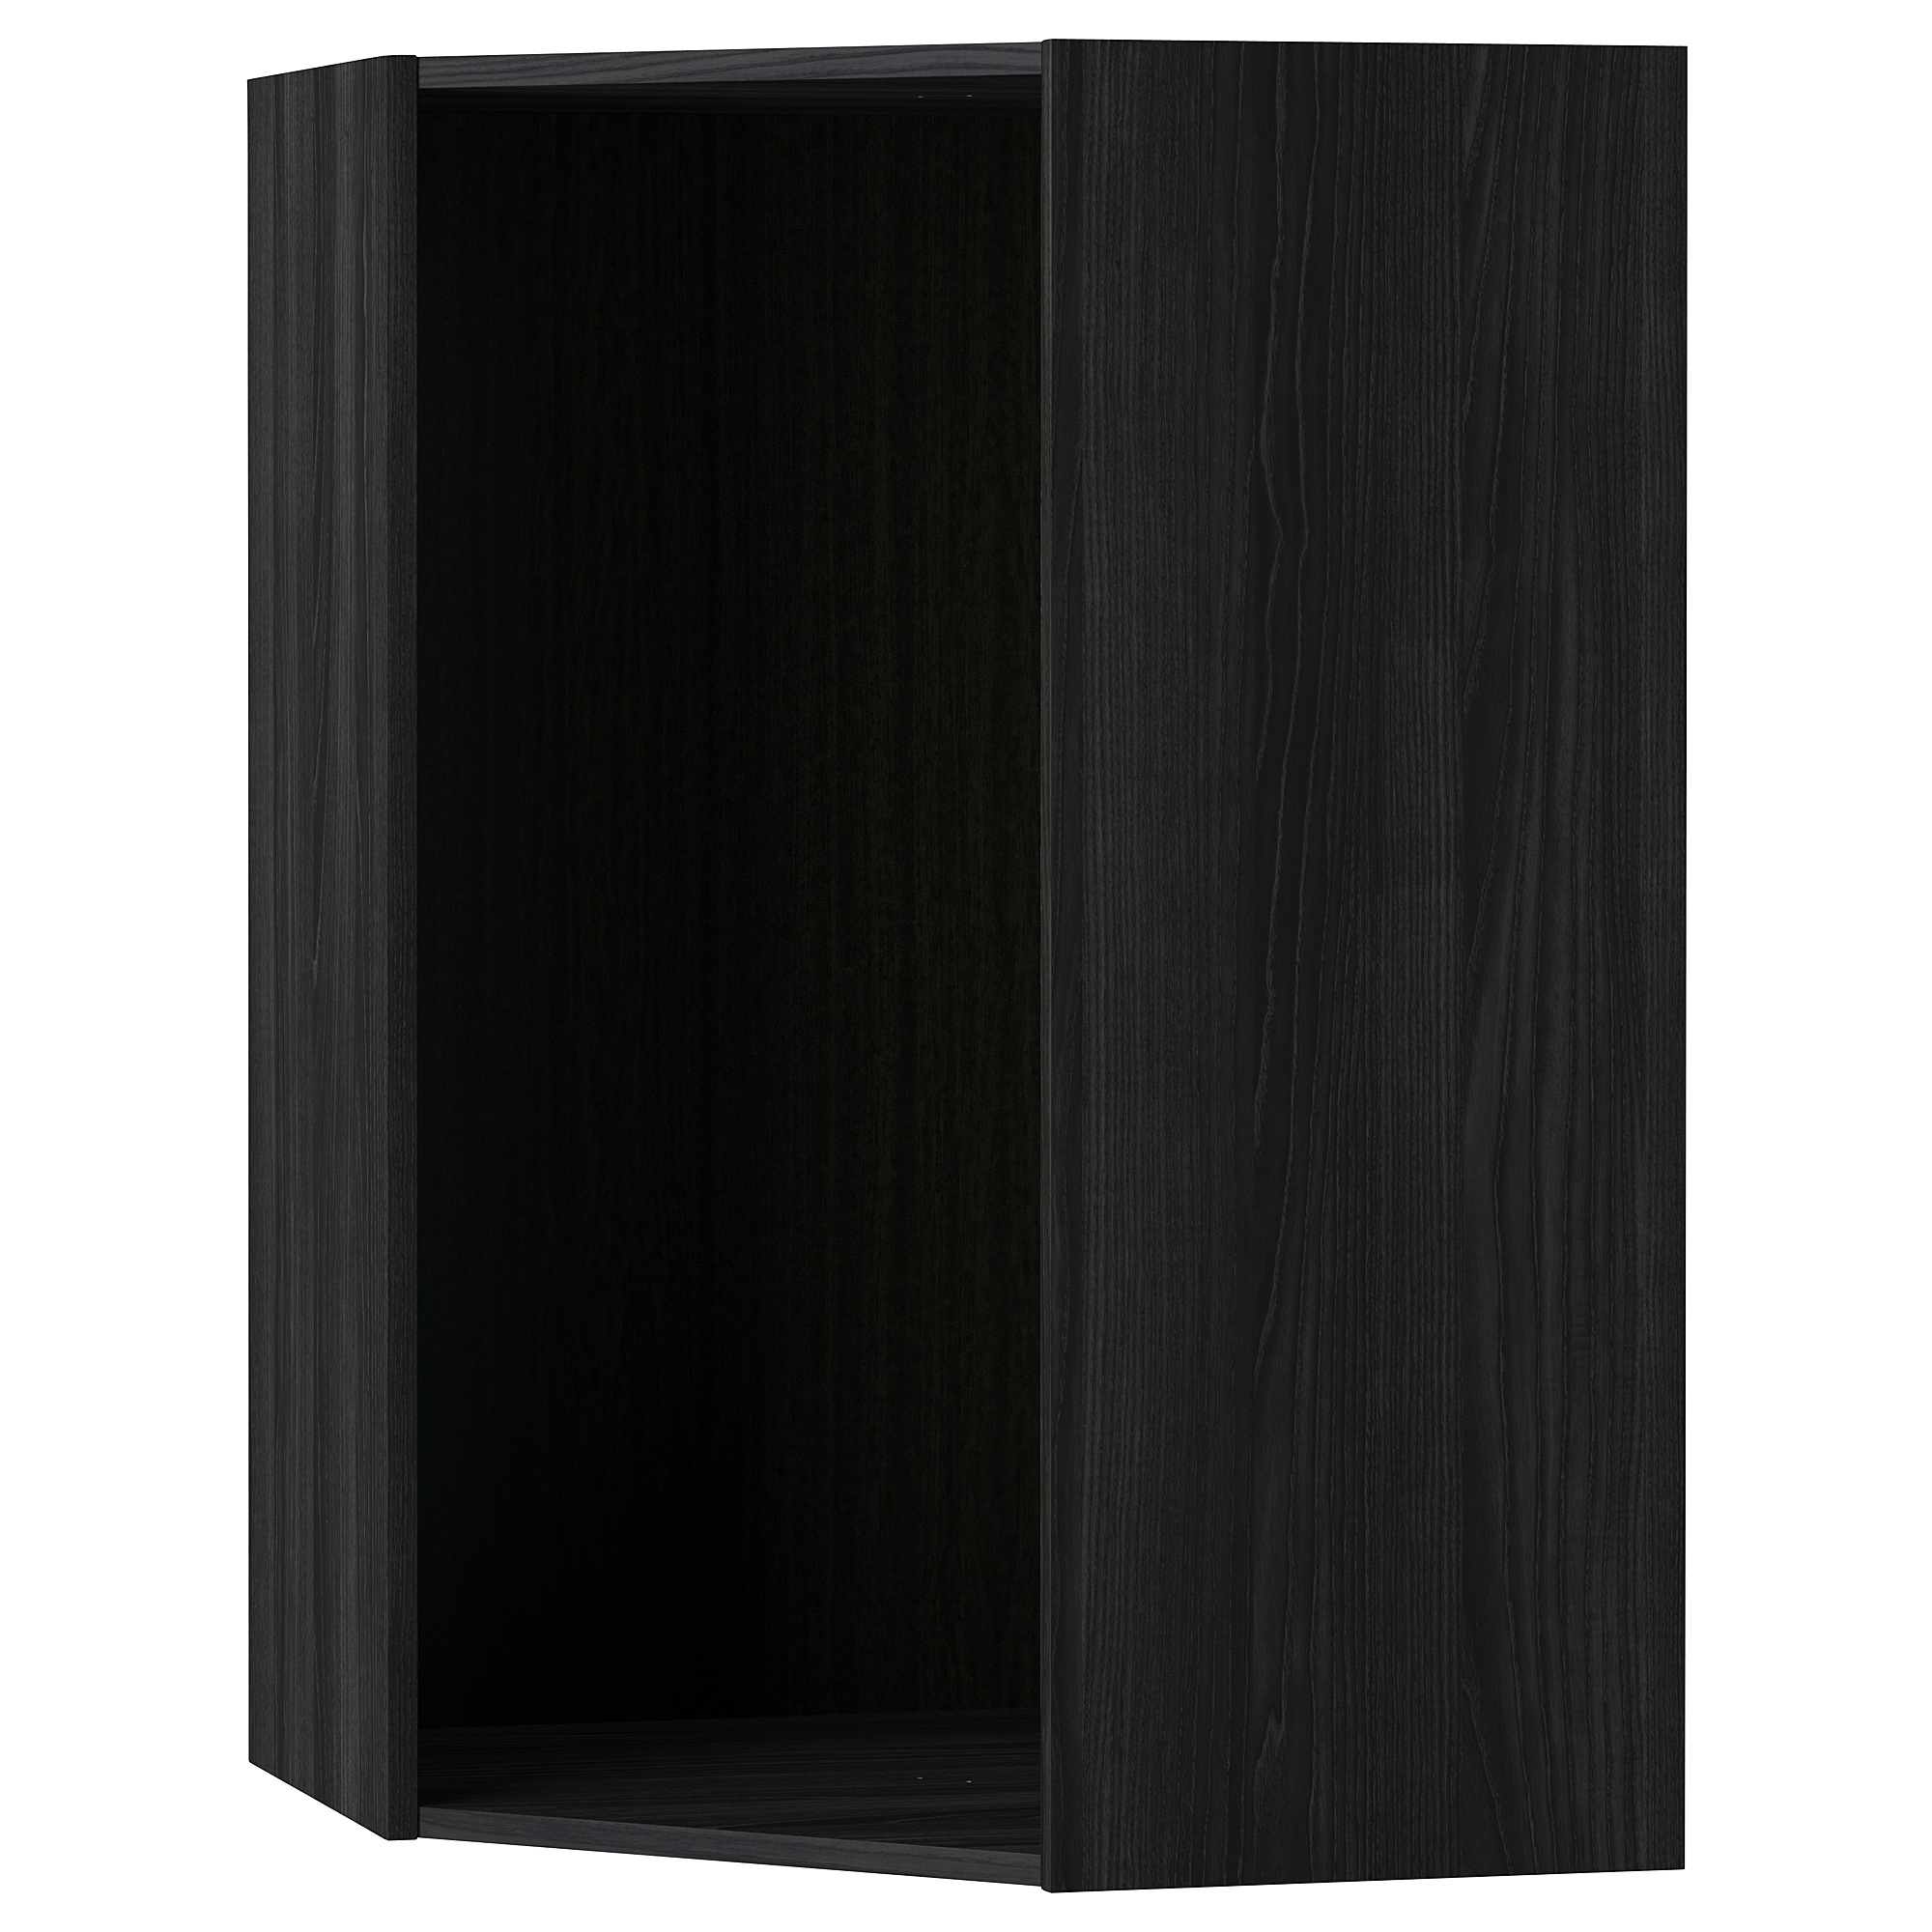 METOD corner wall cabinet frame